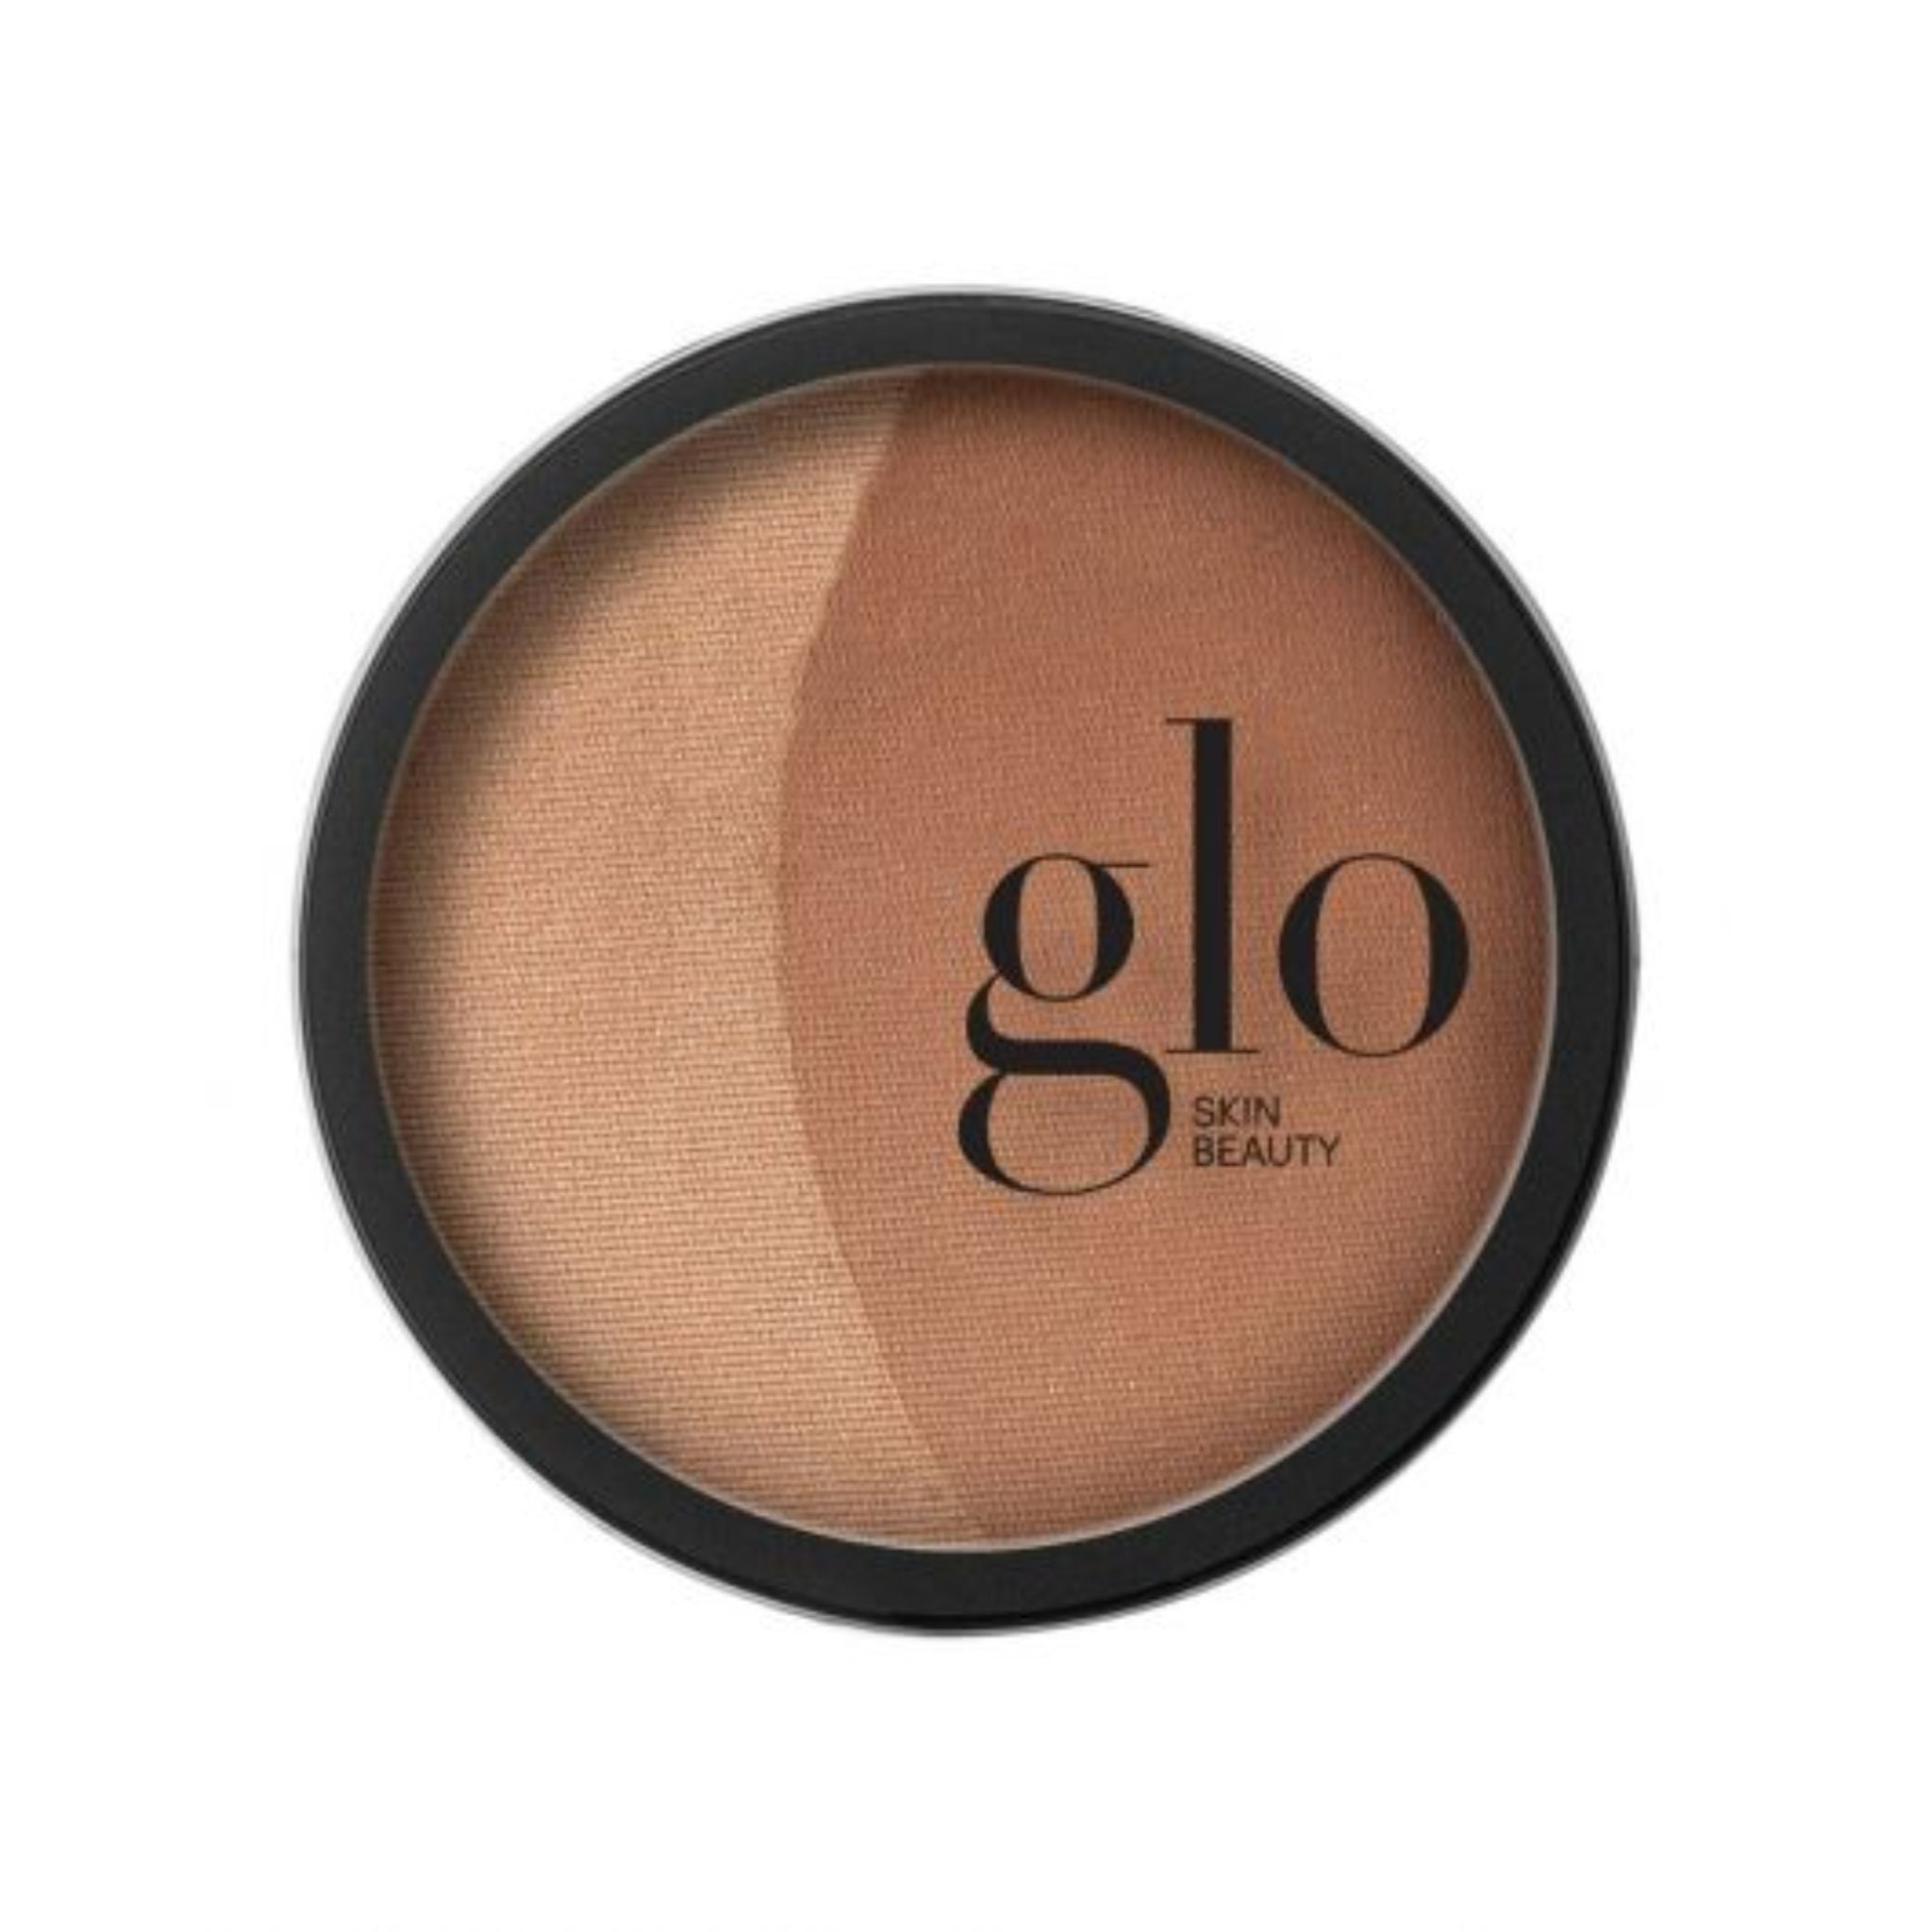 Glo Skin Beauty - Sunkiss Bronzer